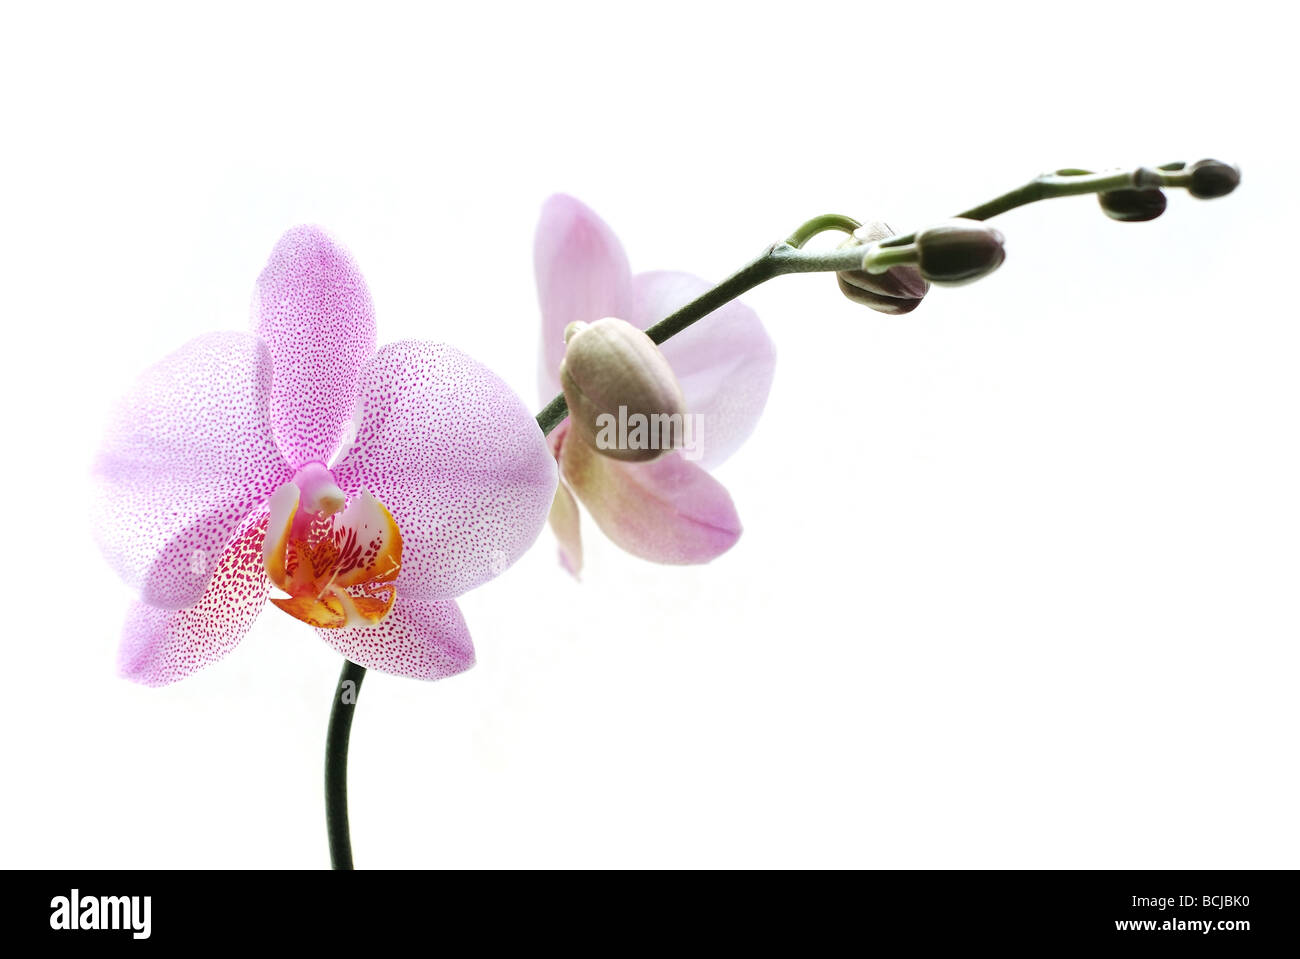 Rosa phalaenopsis orchidee isolati su sfondo bianco Foto Stock